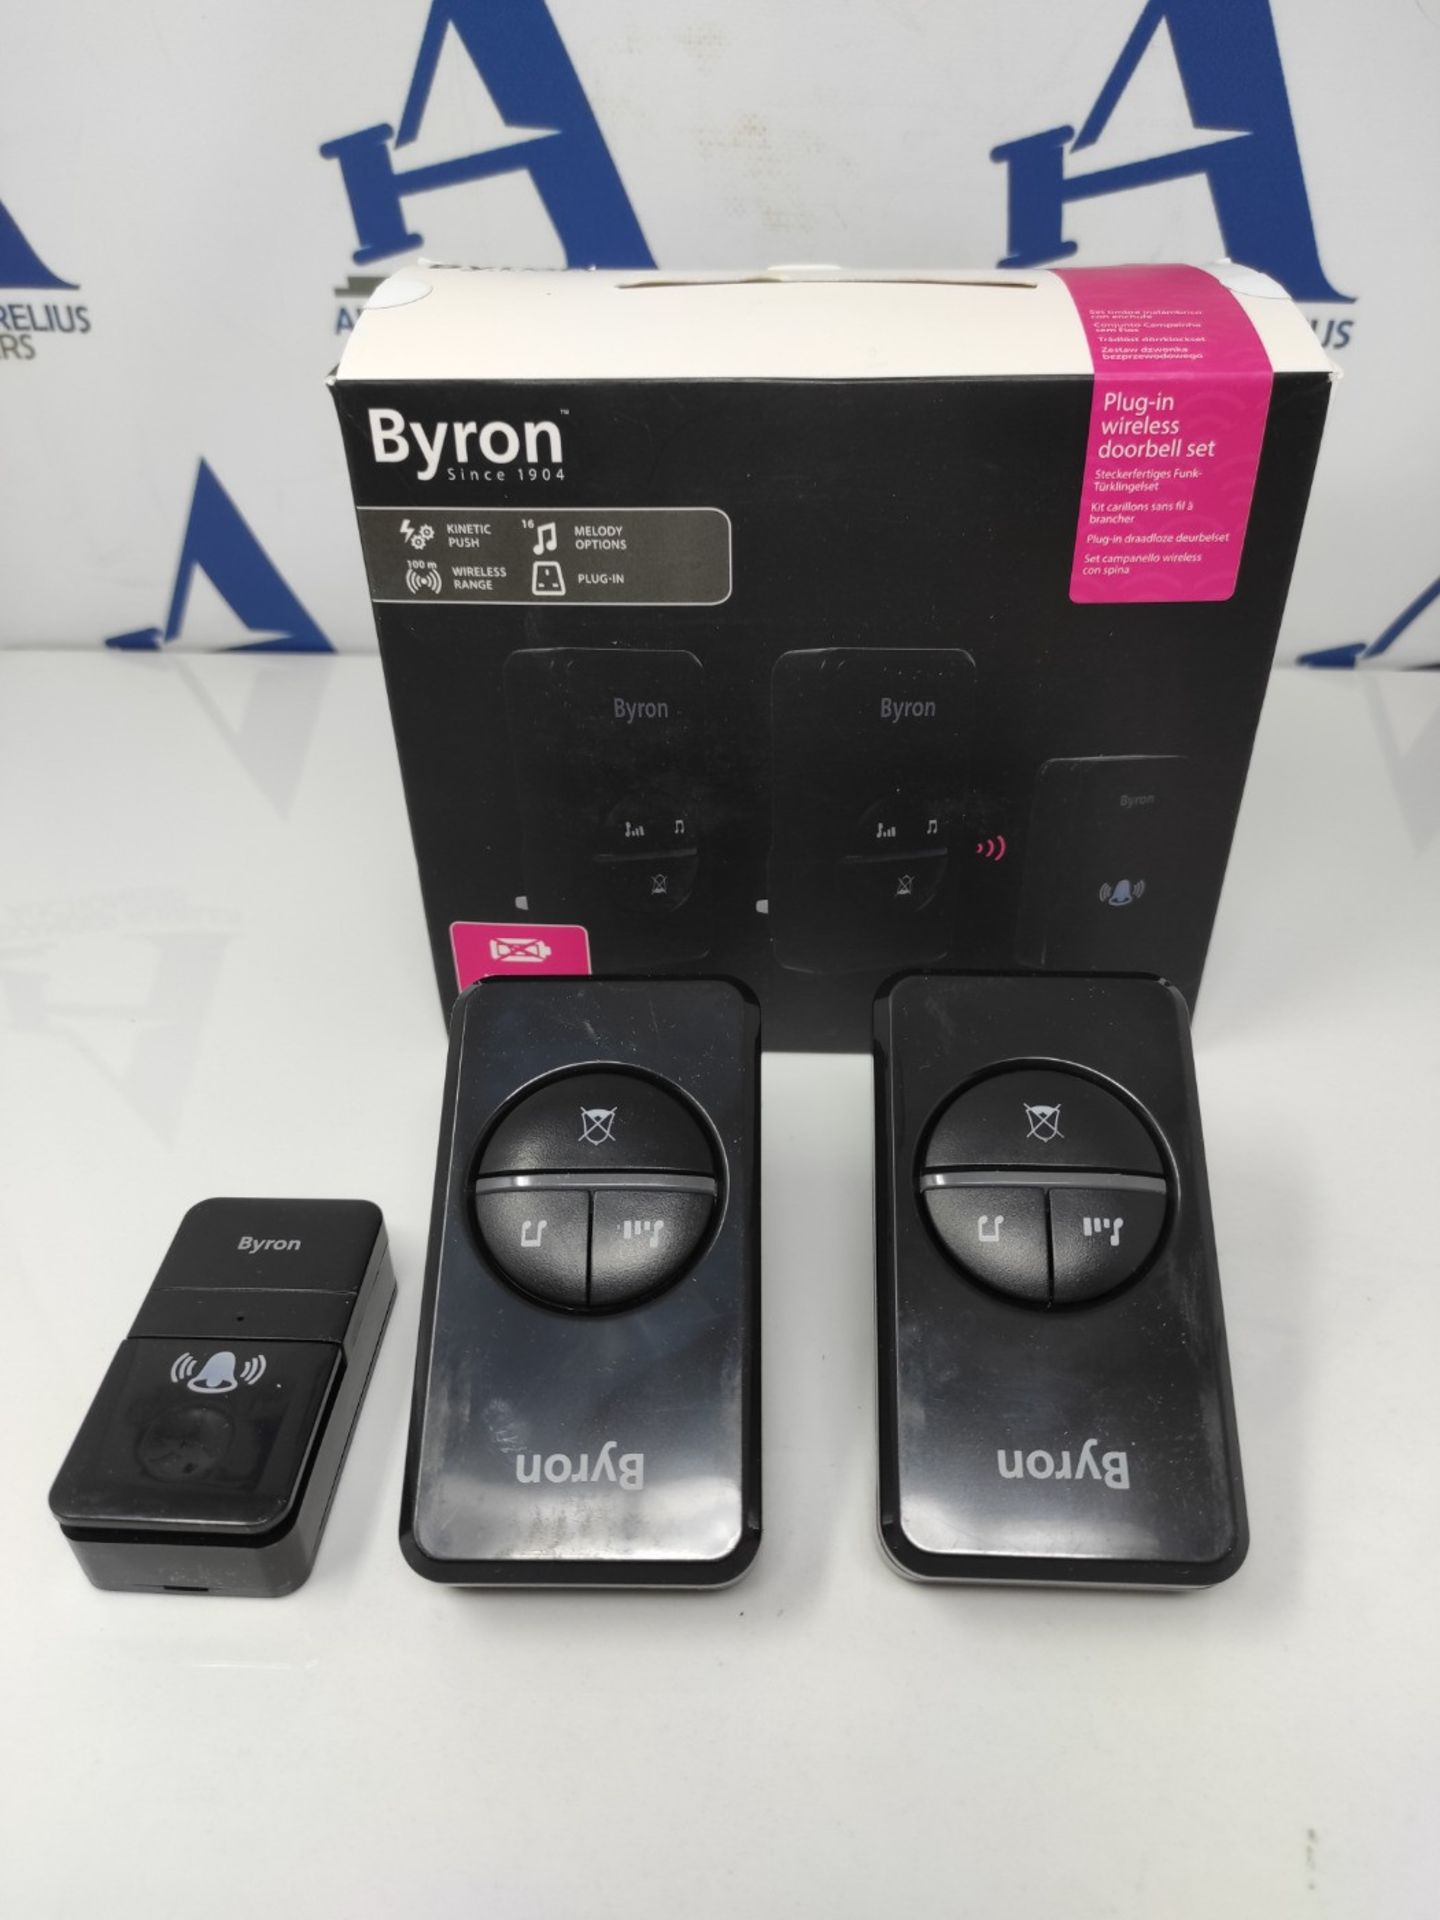 Byron DBY-23455BS Wireless Doorbell Set - 2 Plugs - Kinetic Energy - Black - Image 2 of 3